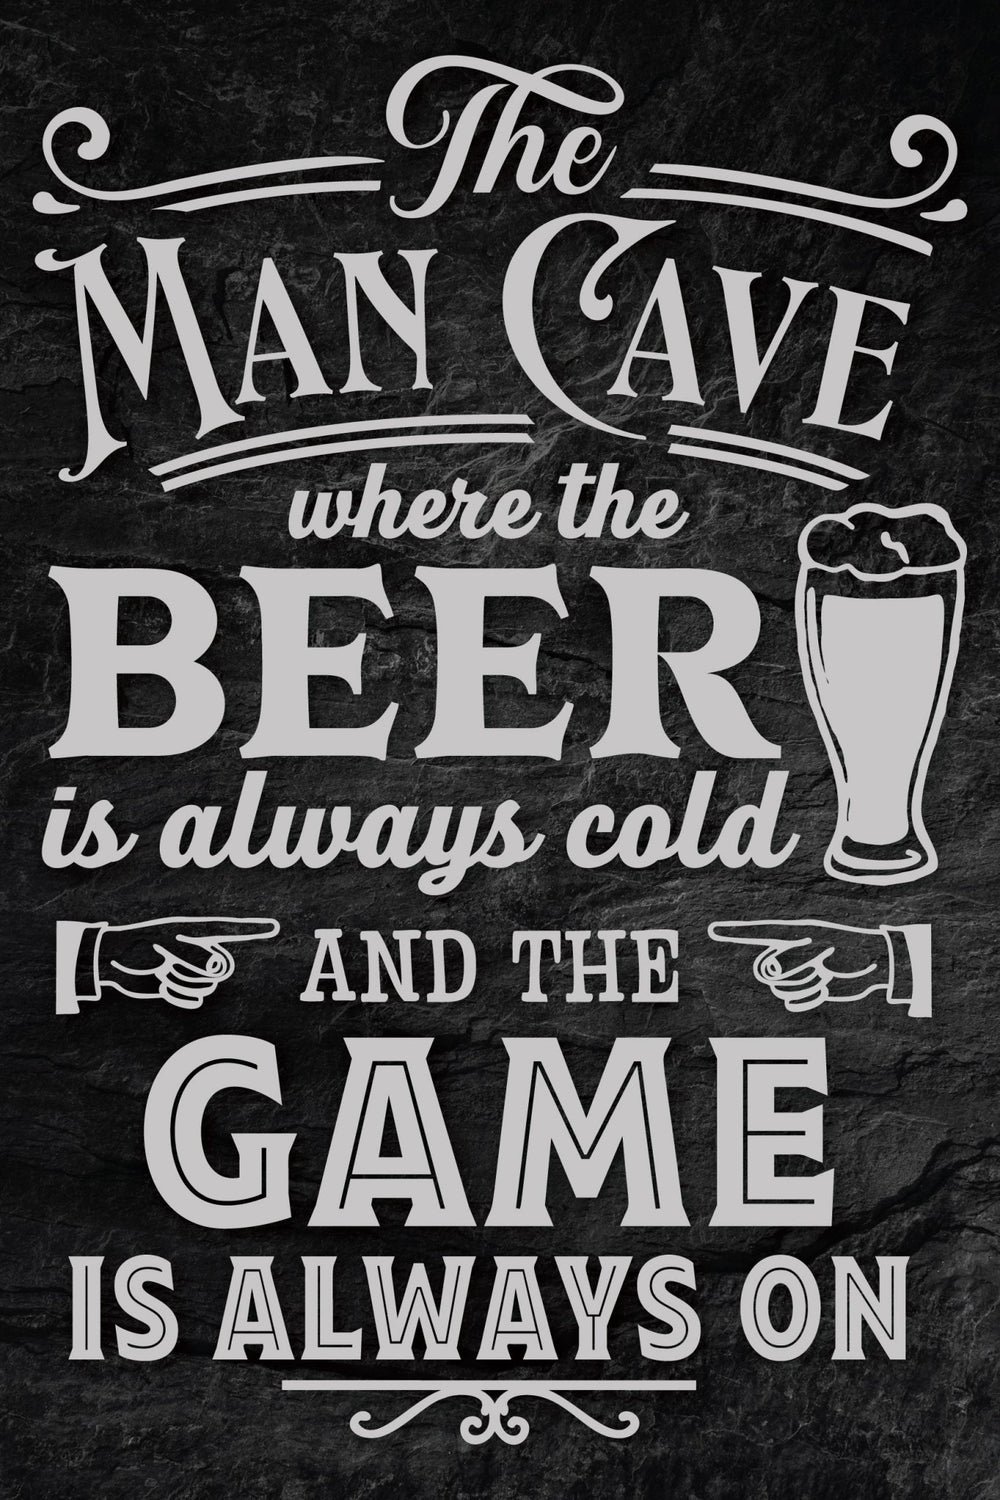 Beer Man Cave Metal Sign